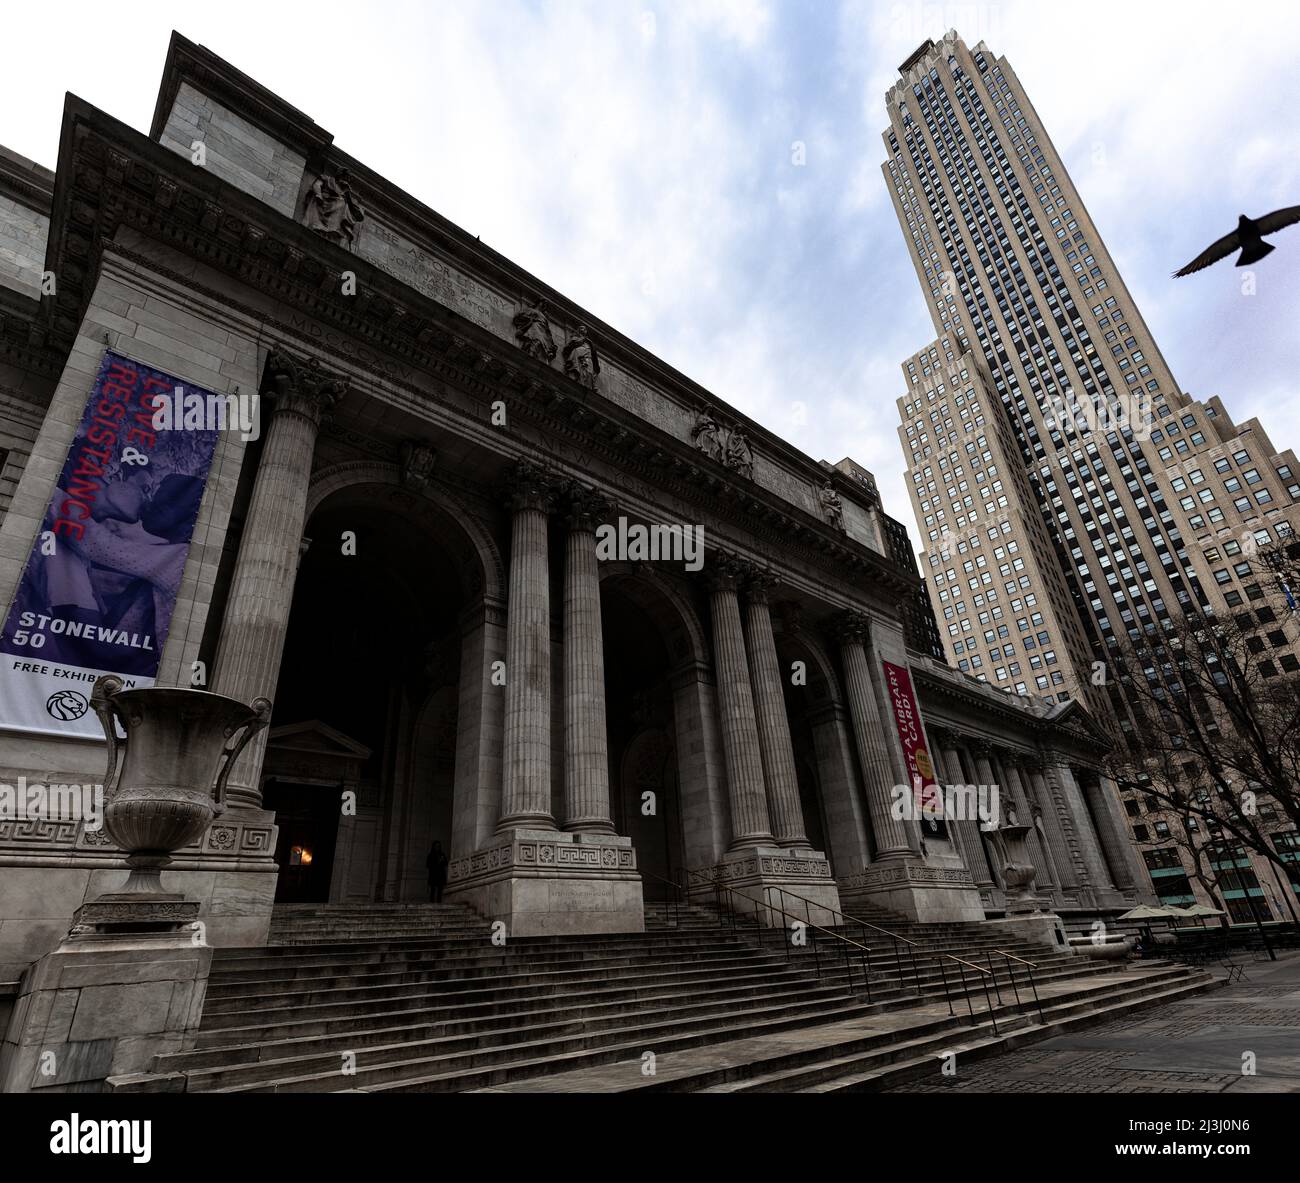 5 AVE/W 40 ST, New York City, NY, USA, New York Public Library to the left Stock Photo